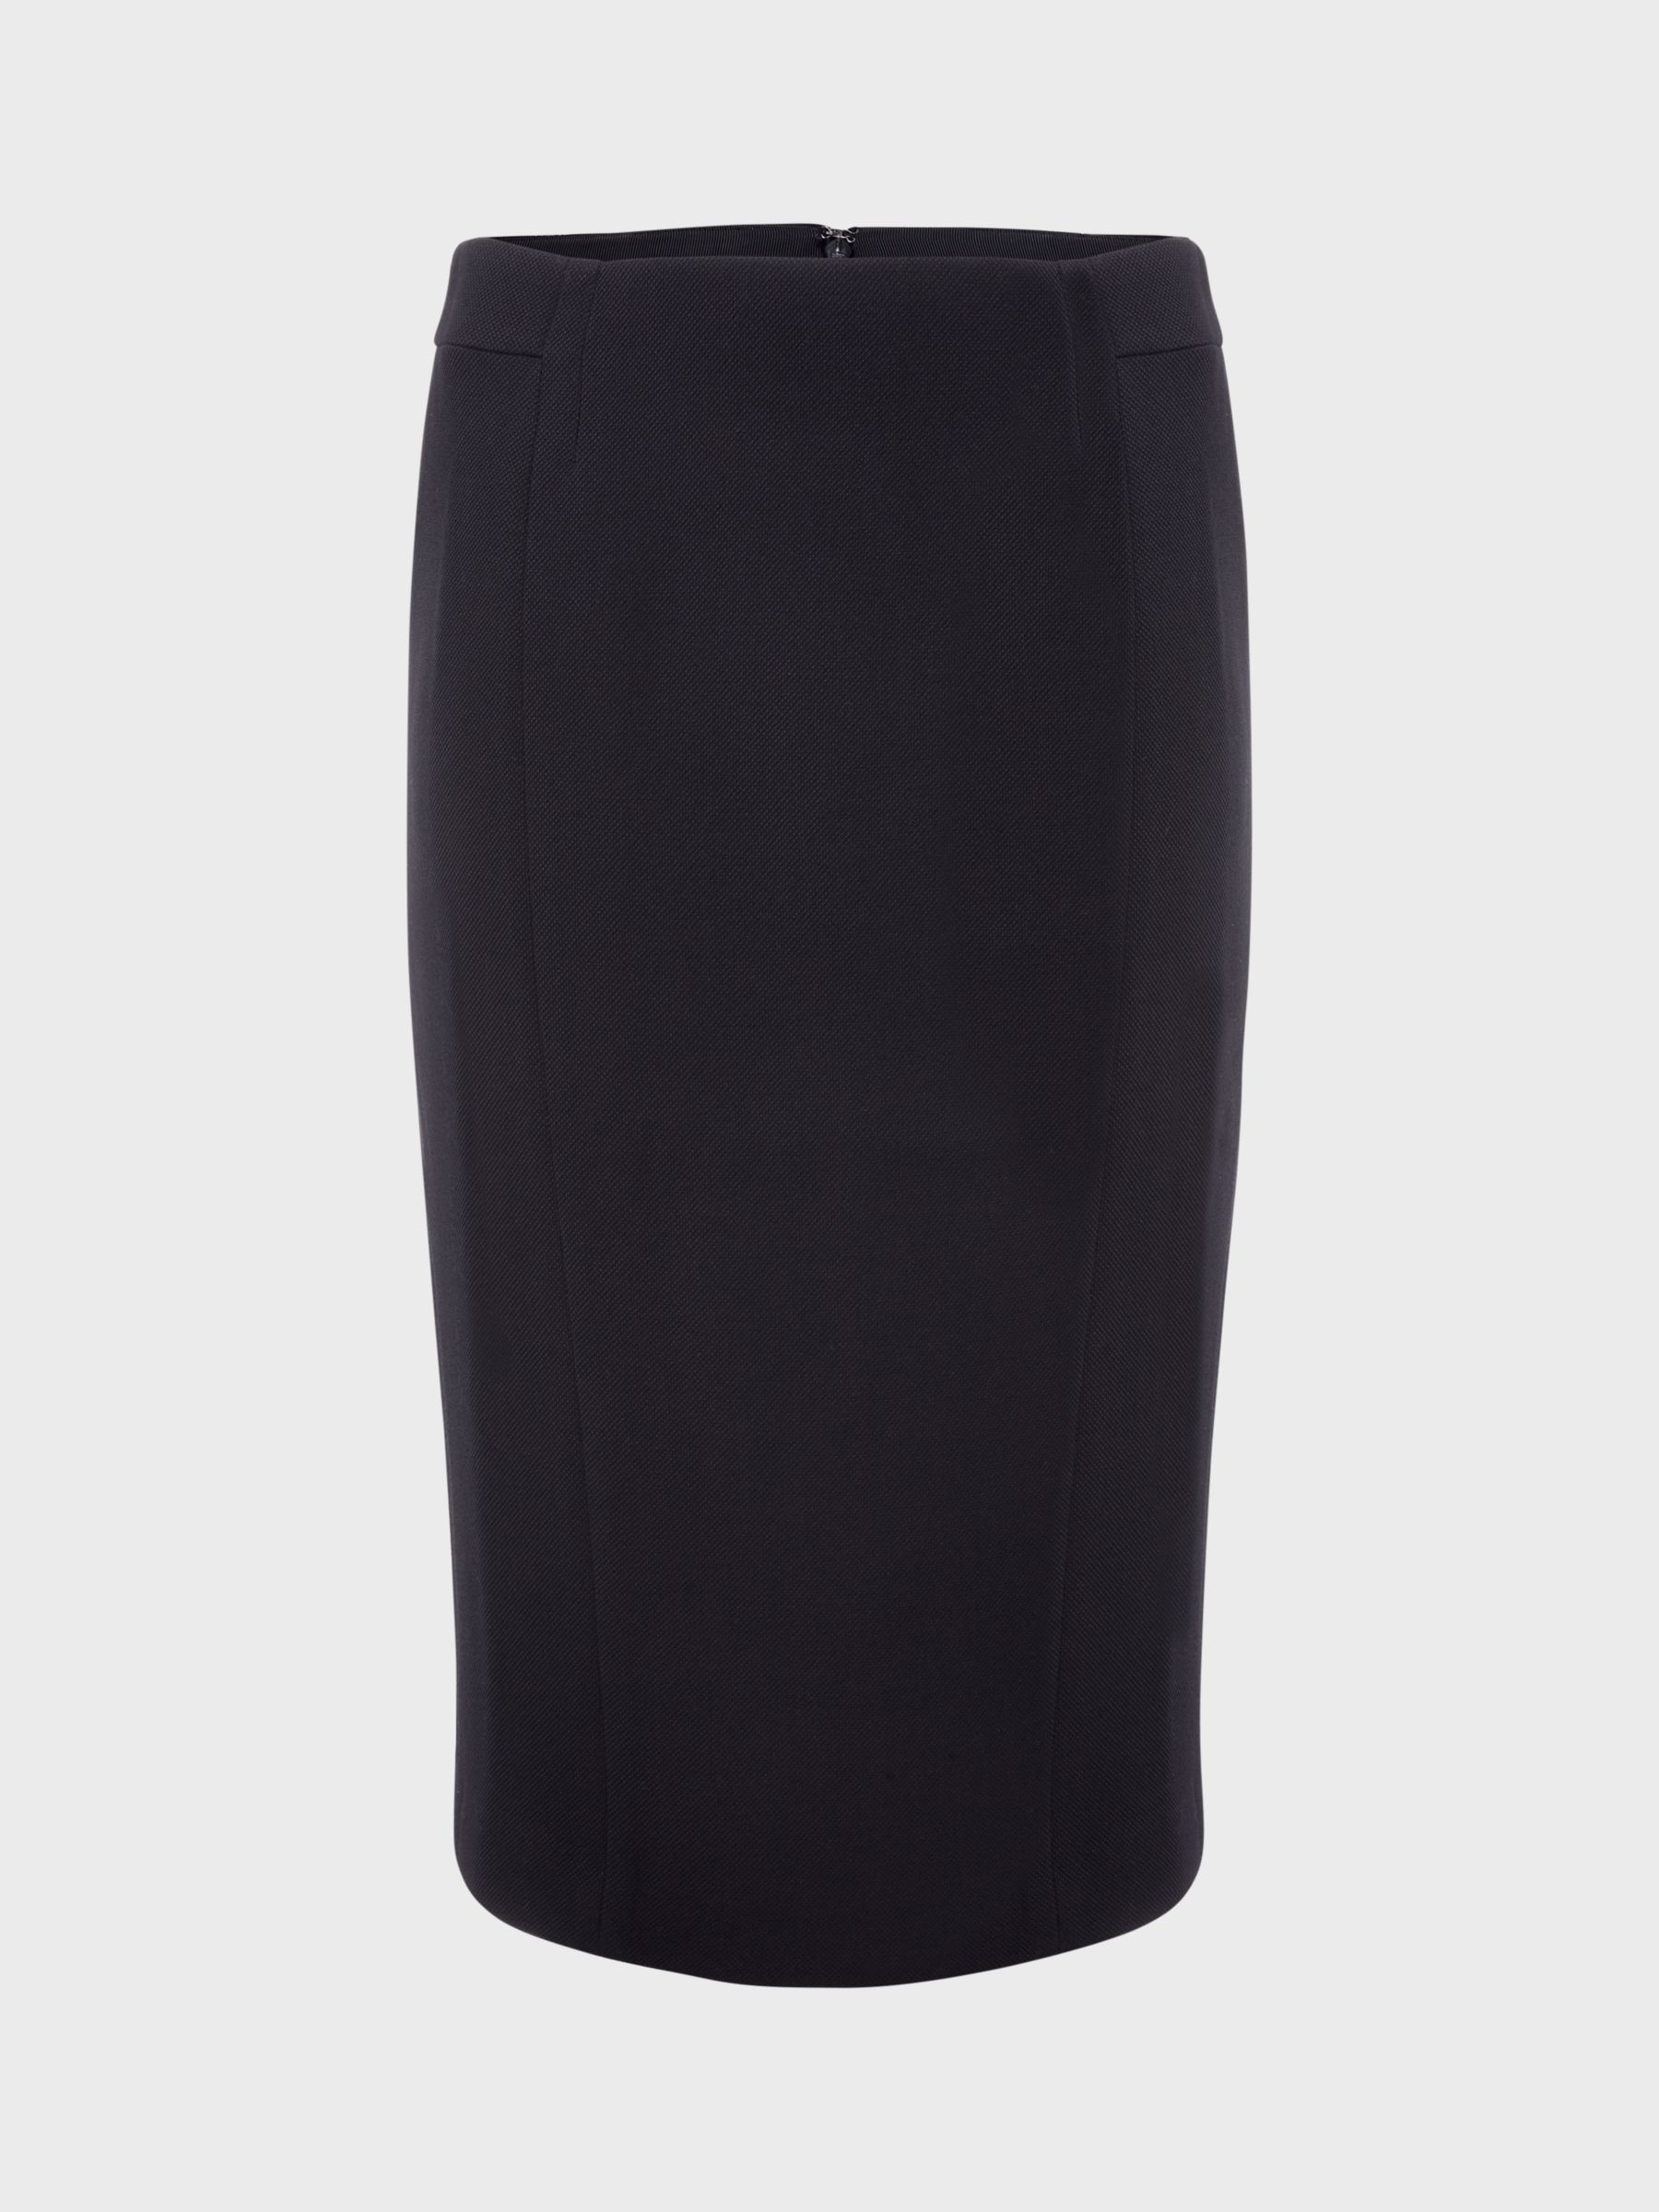 Hobbs Mia Pencil Knee Length Skirt, Navy at John Lewis & Partners